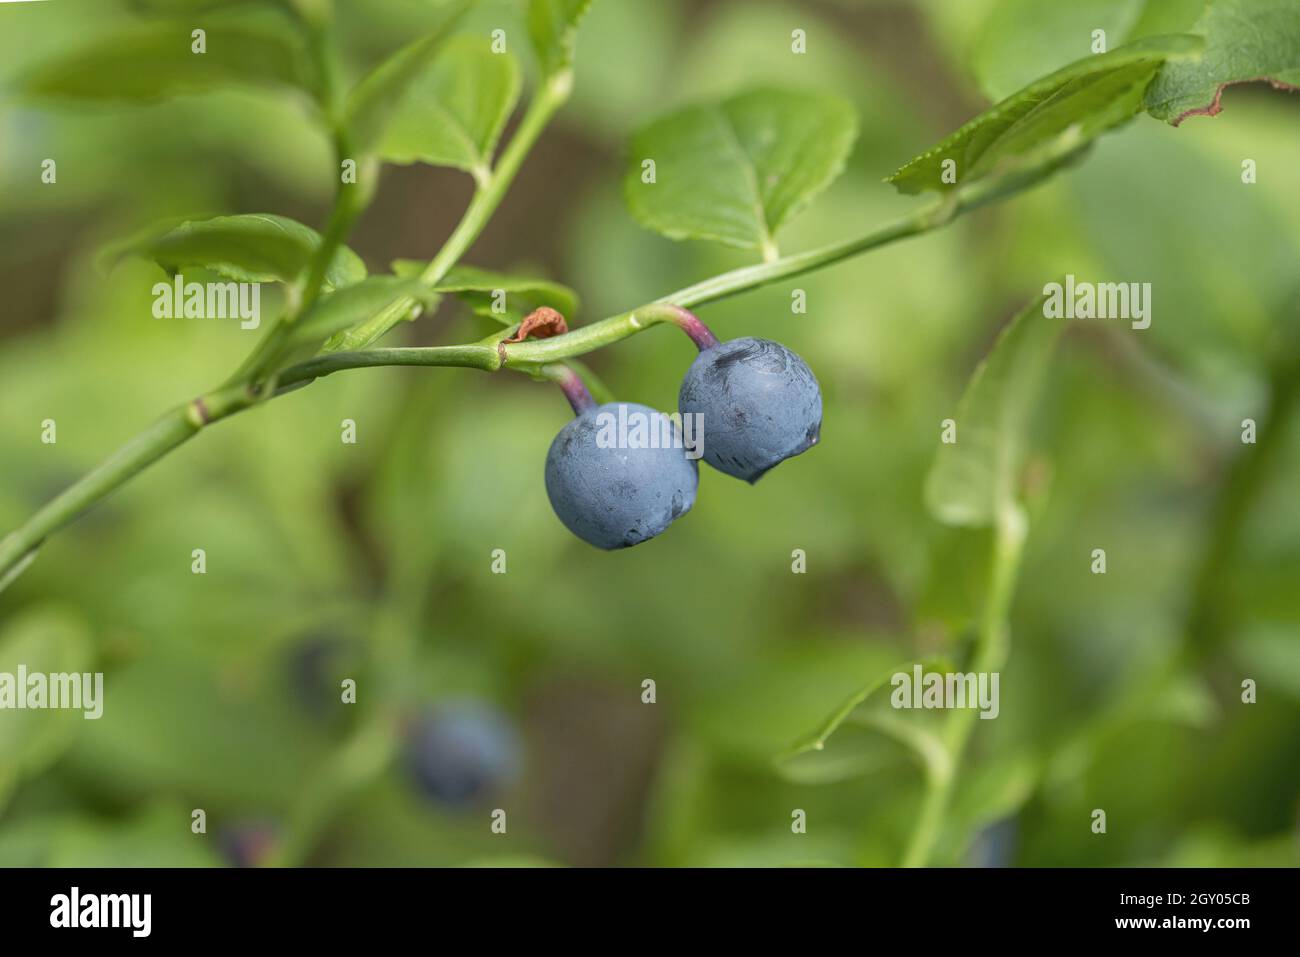 dwarf bilberry, blueberry, huckleberry, low billberry (Vaccinium myrtillus), blueberries on a branch, Germany Stock Photo